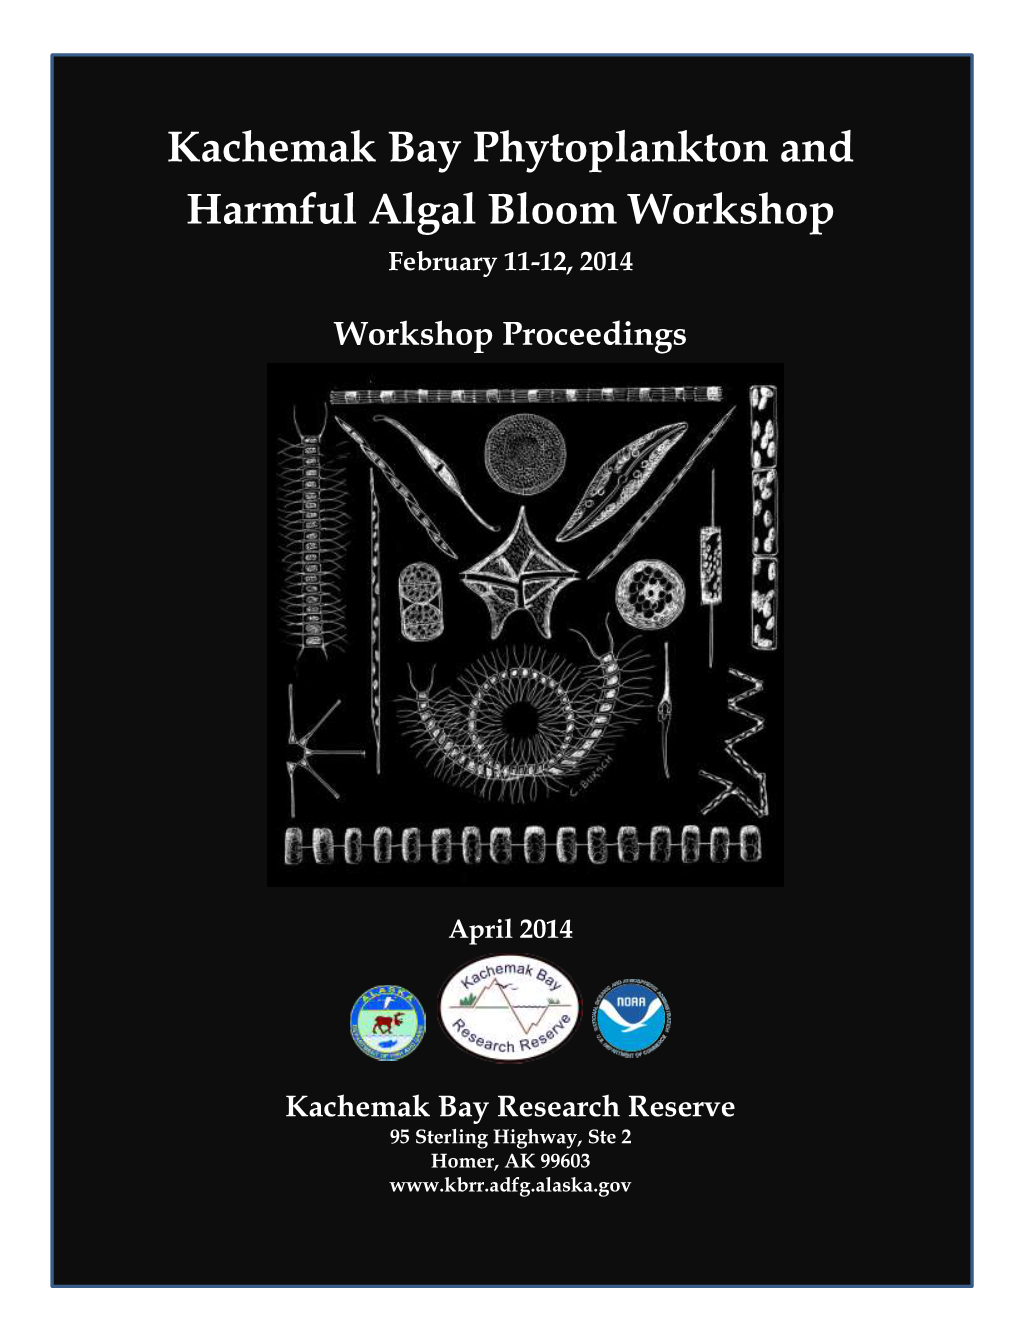 Kachemak Bay Phytoplankton and Harmful Algal Bloom Workshop February 11-12, 2014